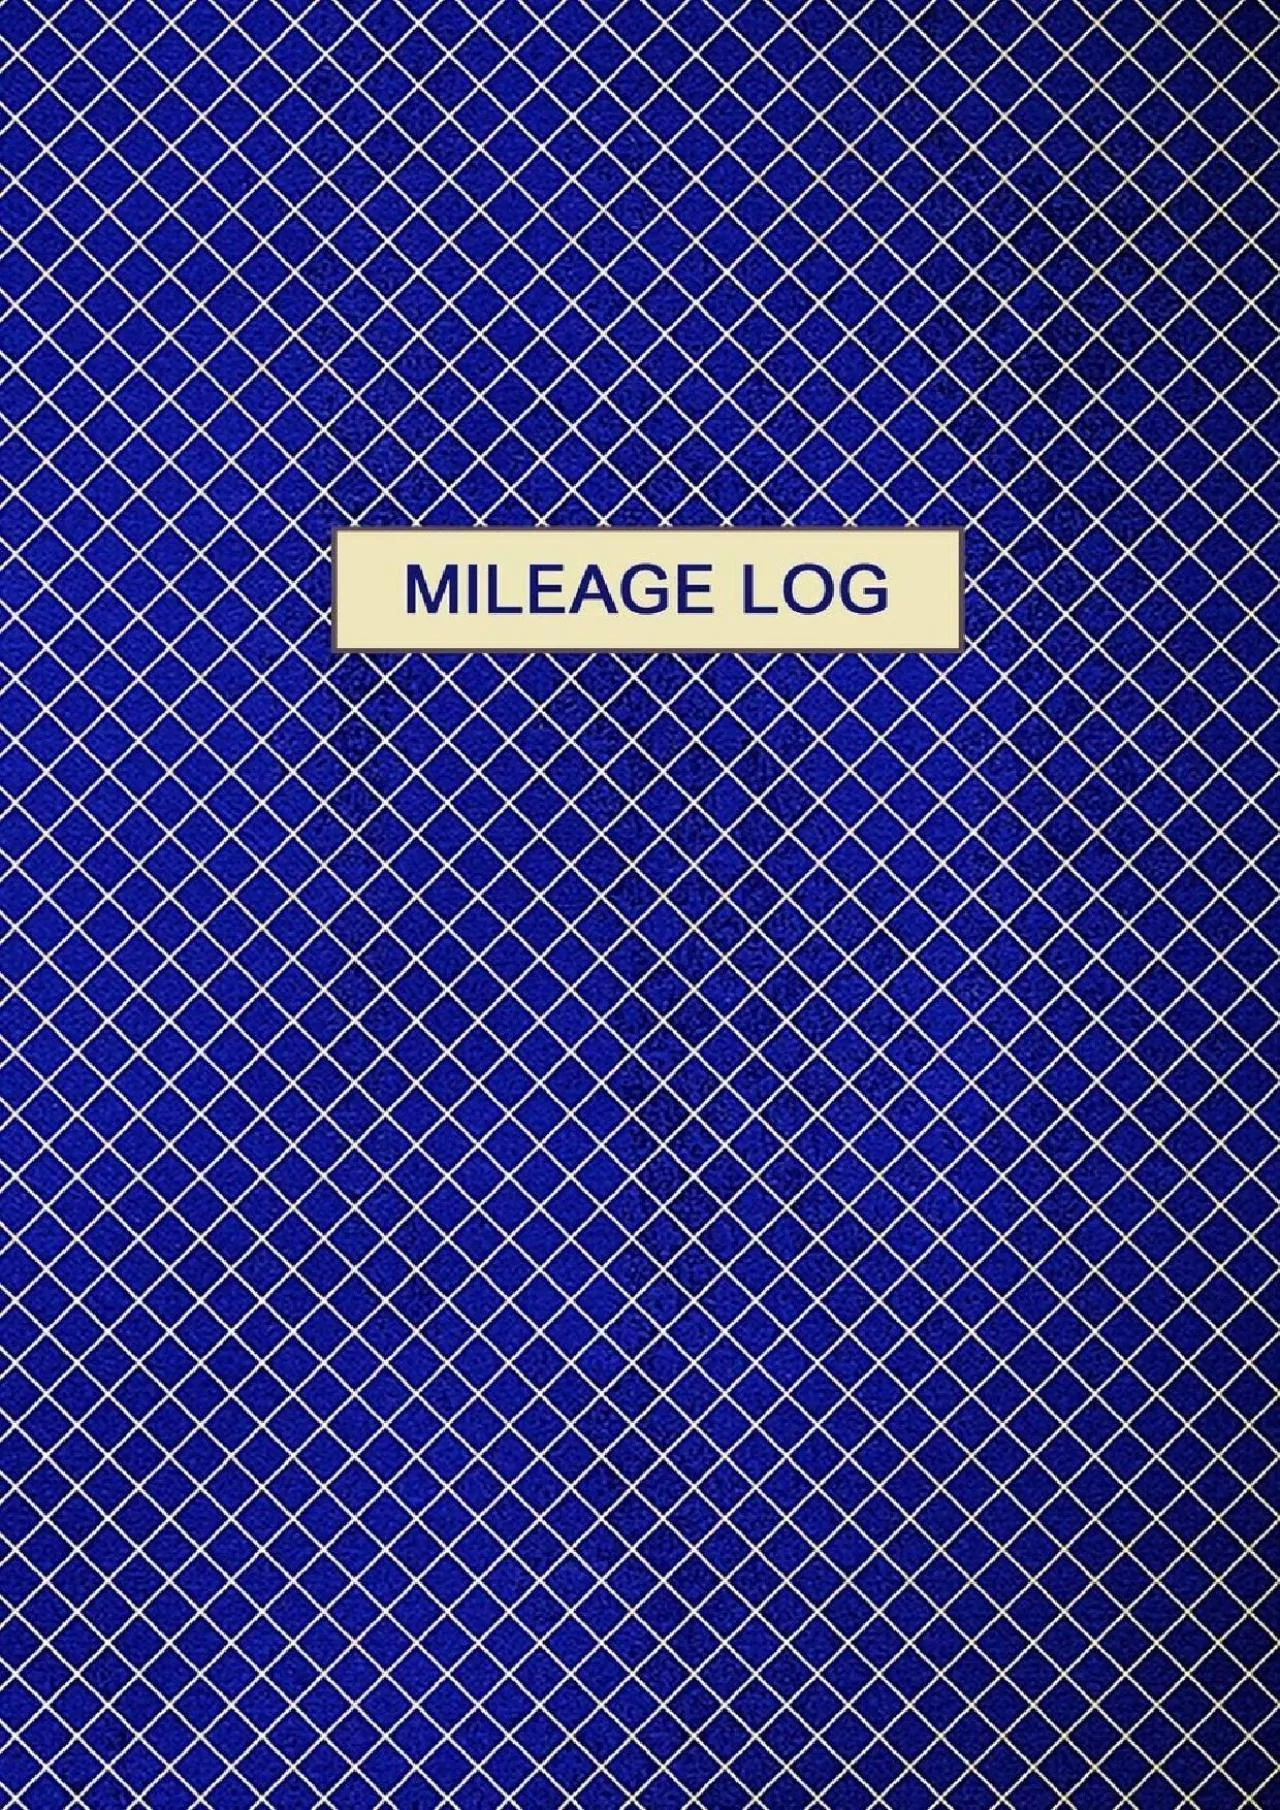 (BOOS)-Mileage Log: Gas & Mileage Log Book: Keep Track of Your Car or Vehicle Mileage